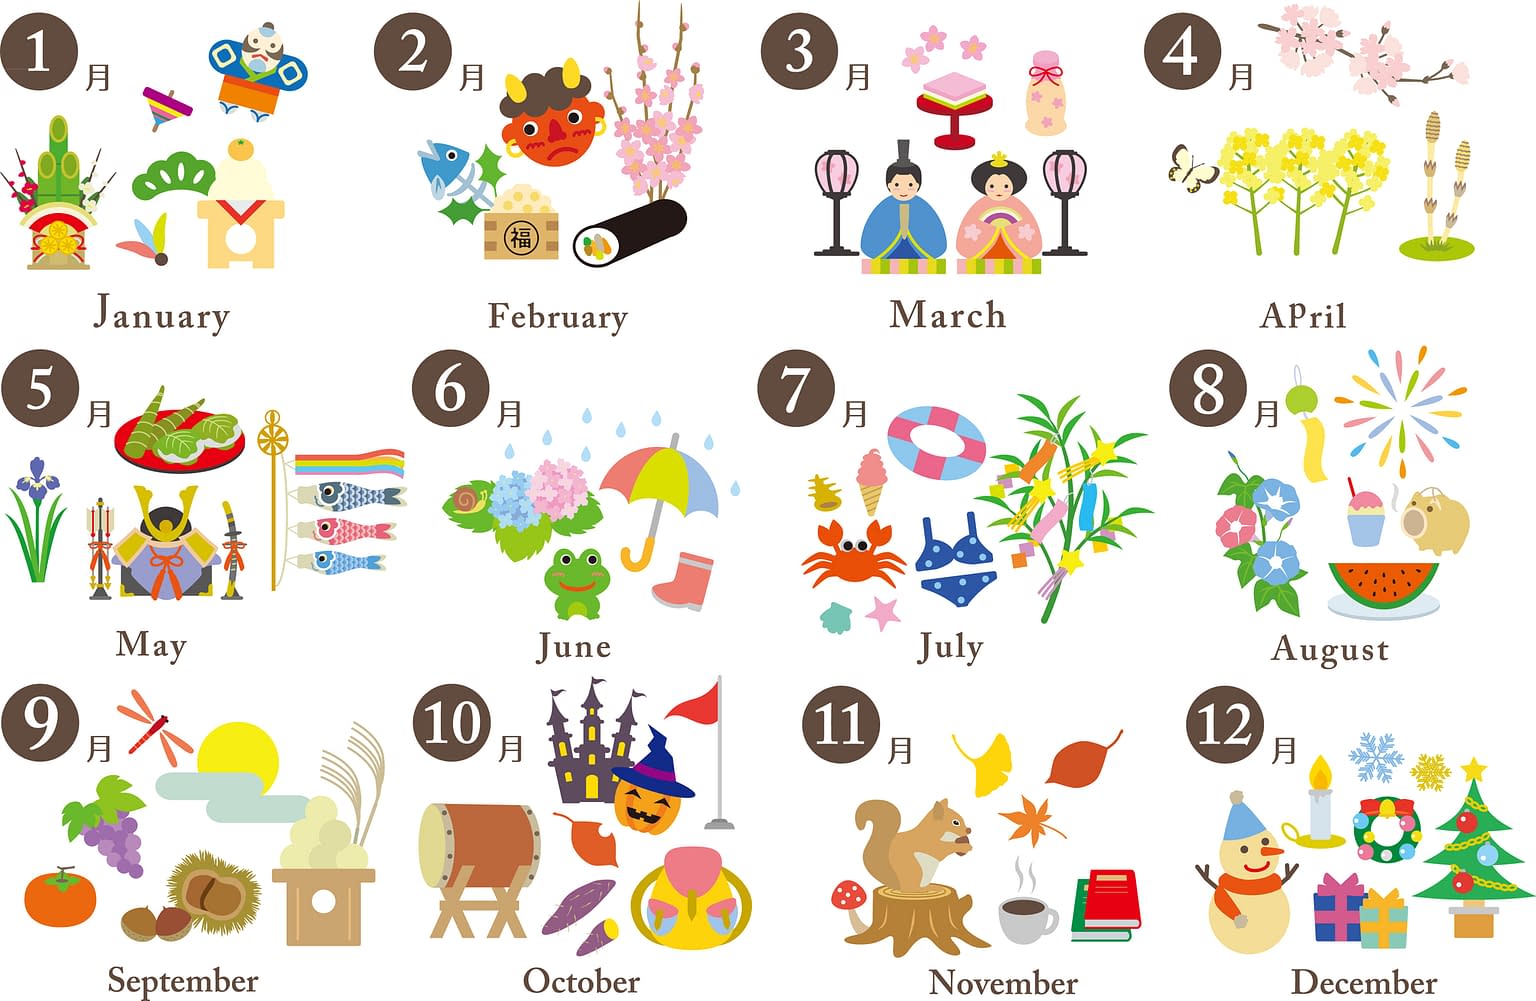 Japan National Holidays (Days Off) Guide & Calendar Dates